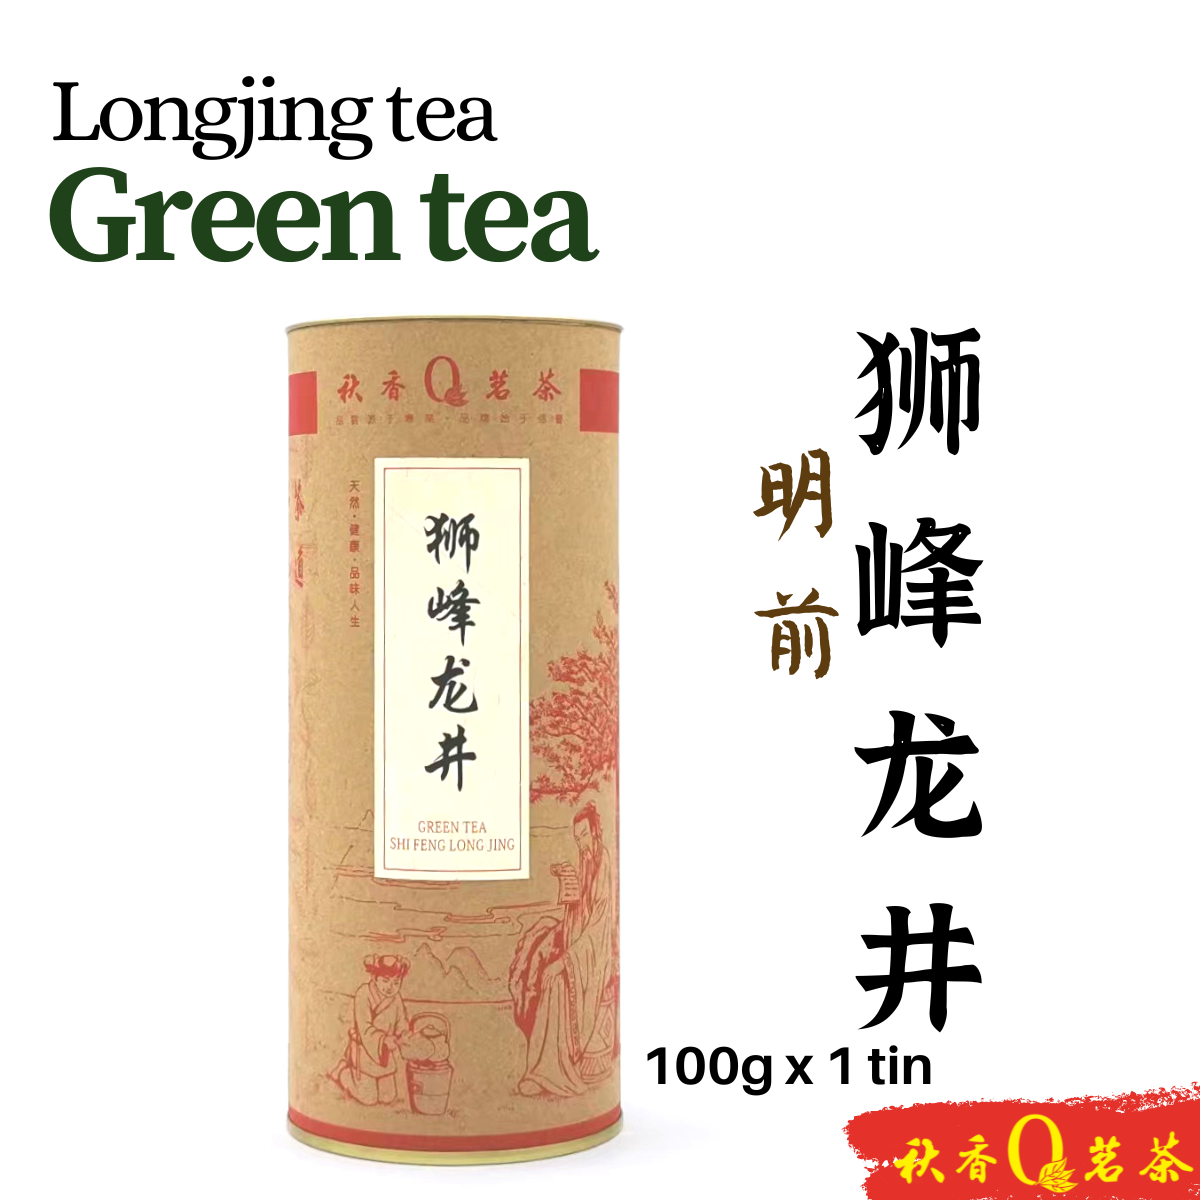 明前狮峰龙井 Shi Feng Longjing tea (Early Spring)【100g】|【绿茶 Green tea】